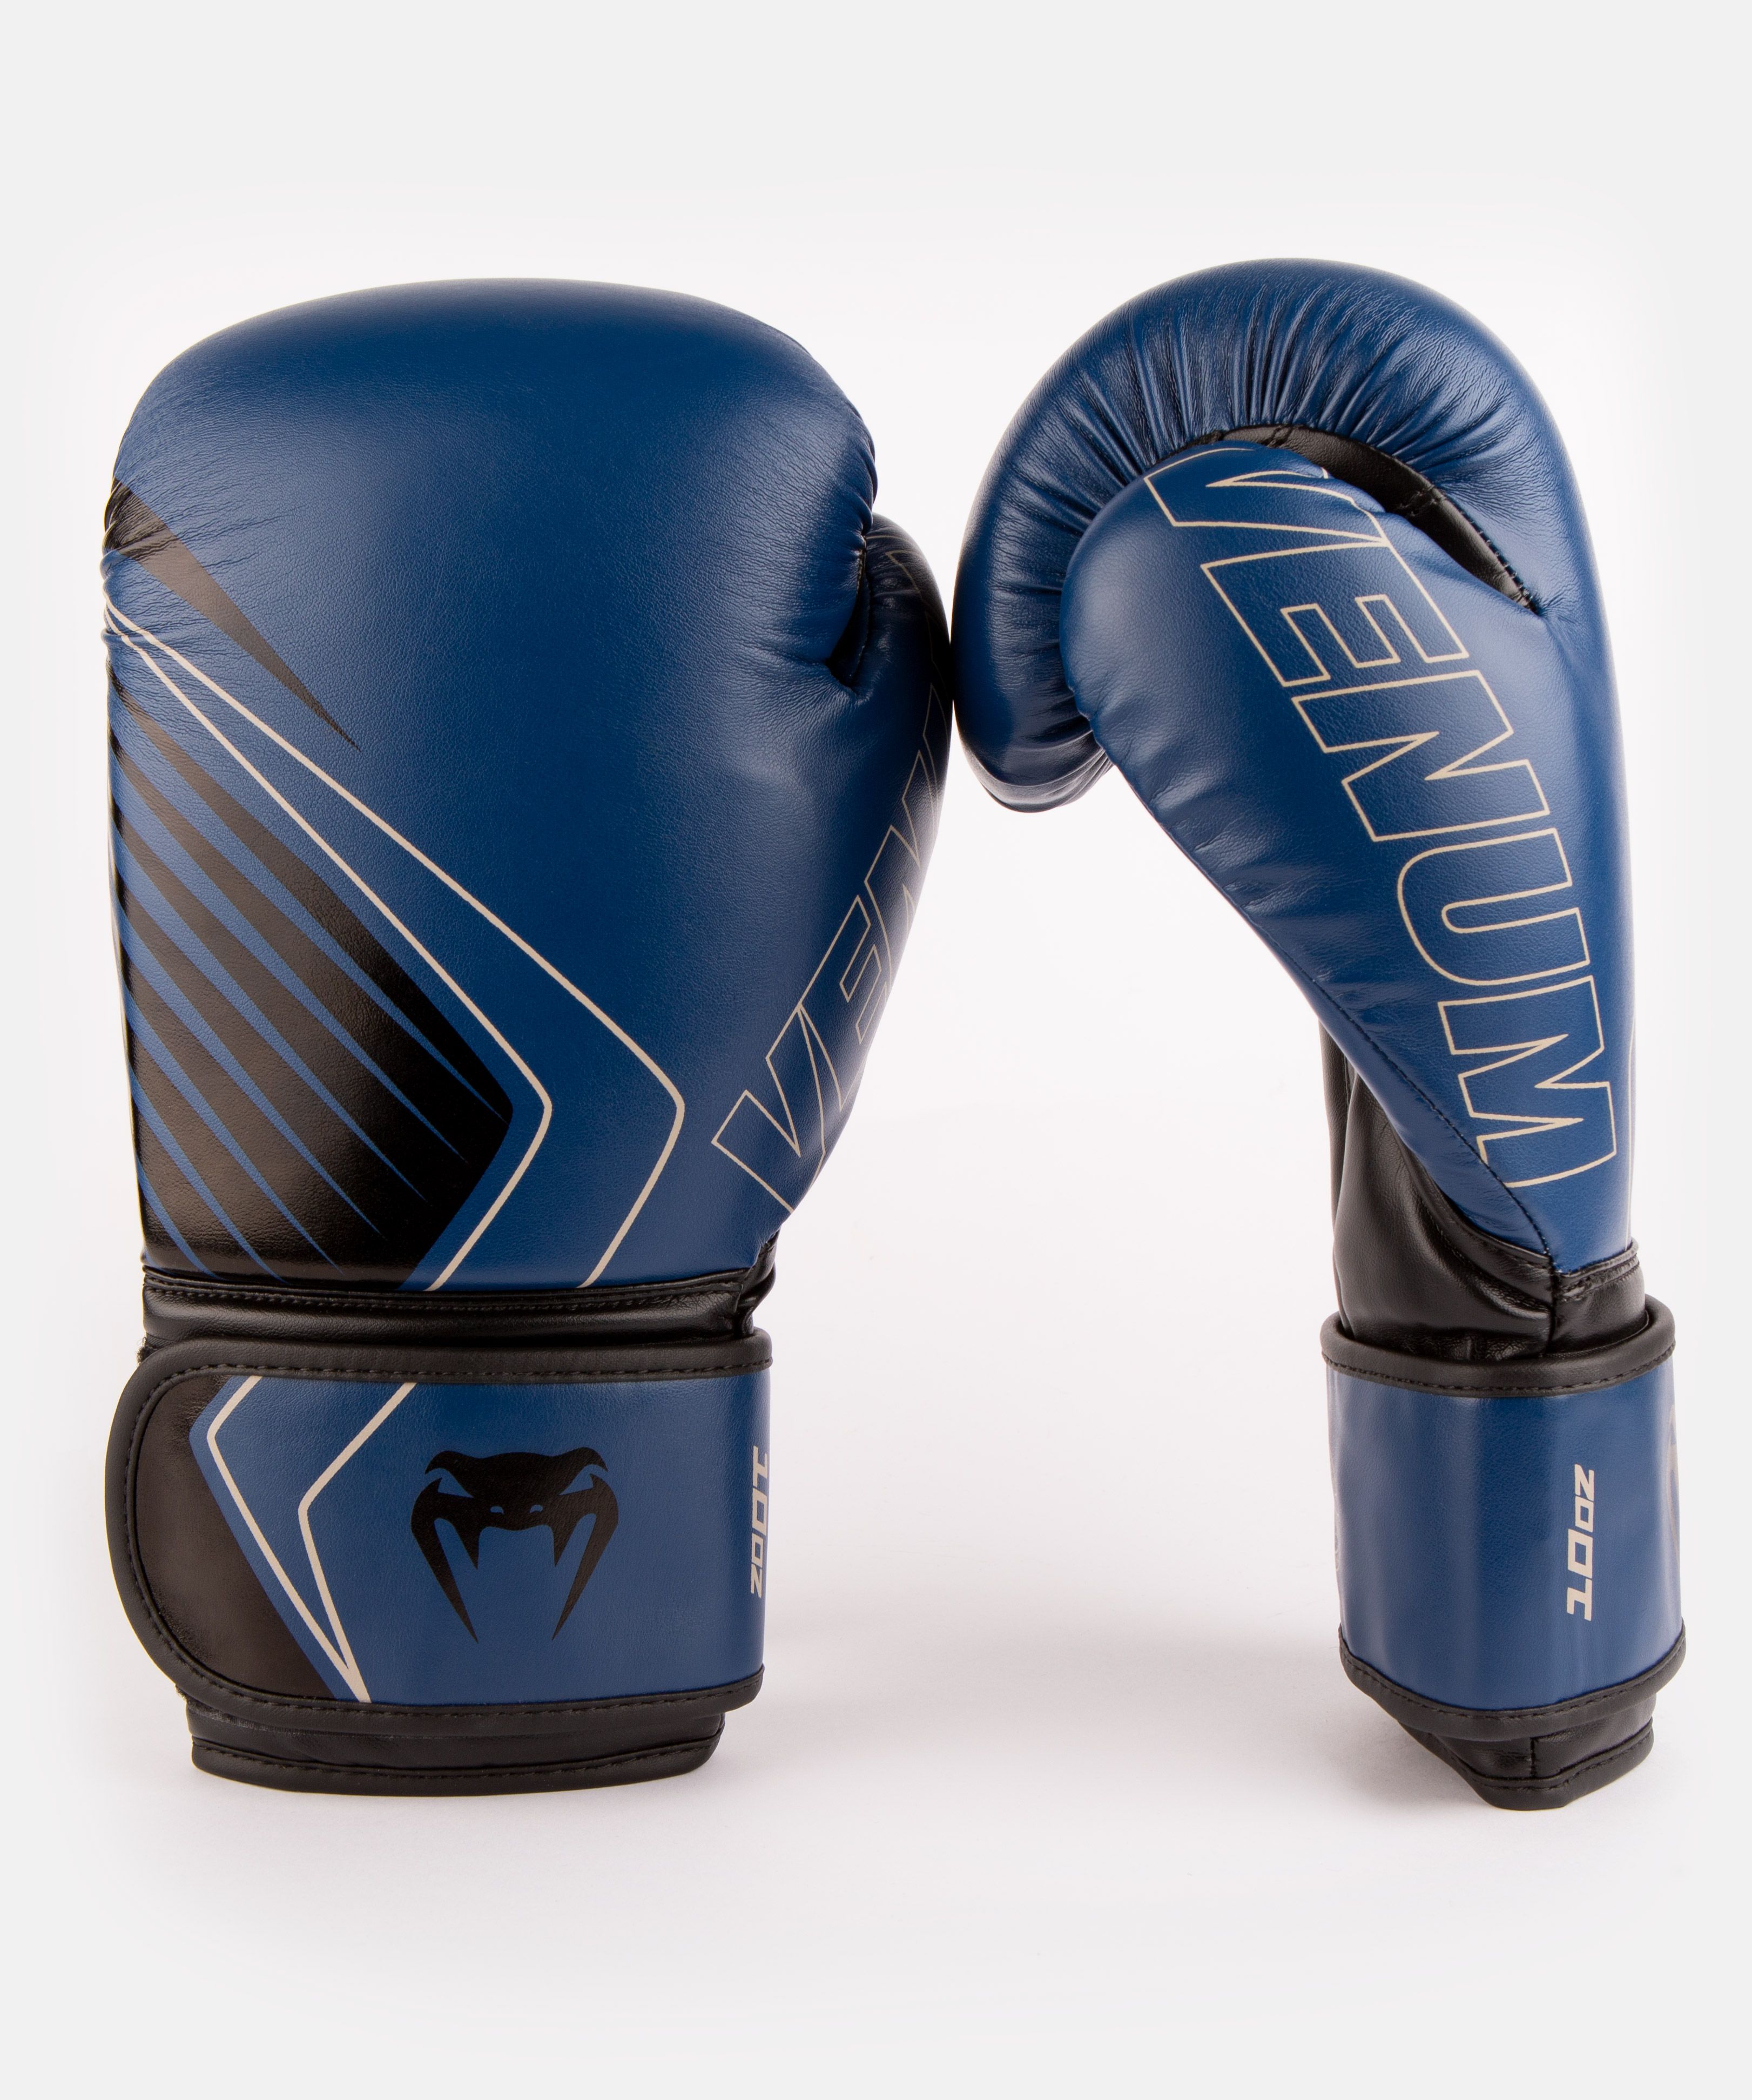 Gants de boxe Venum Contender 2.0 – Bleu marine/Sable